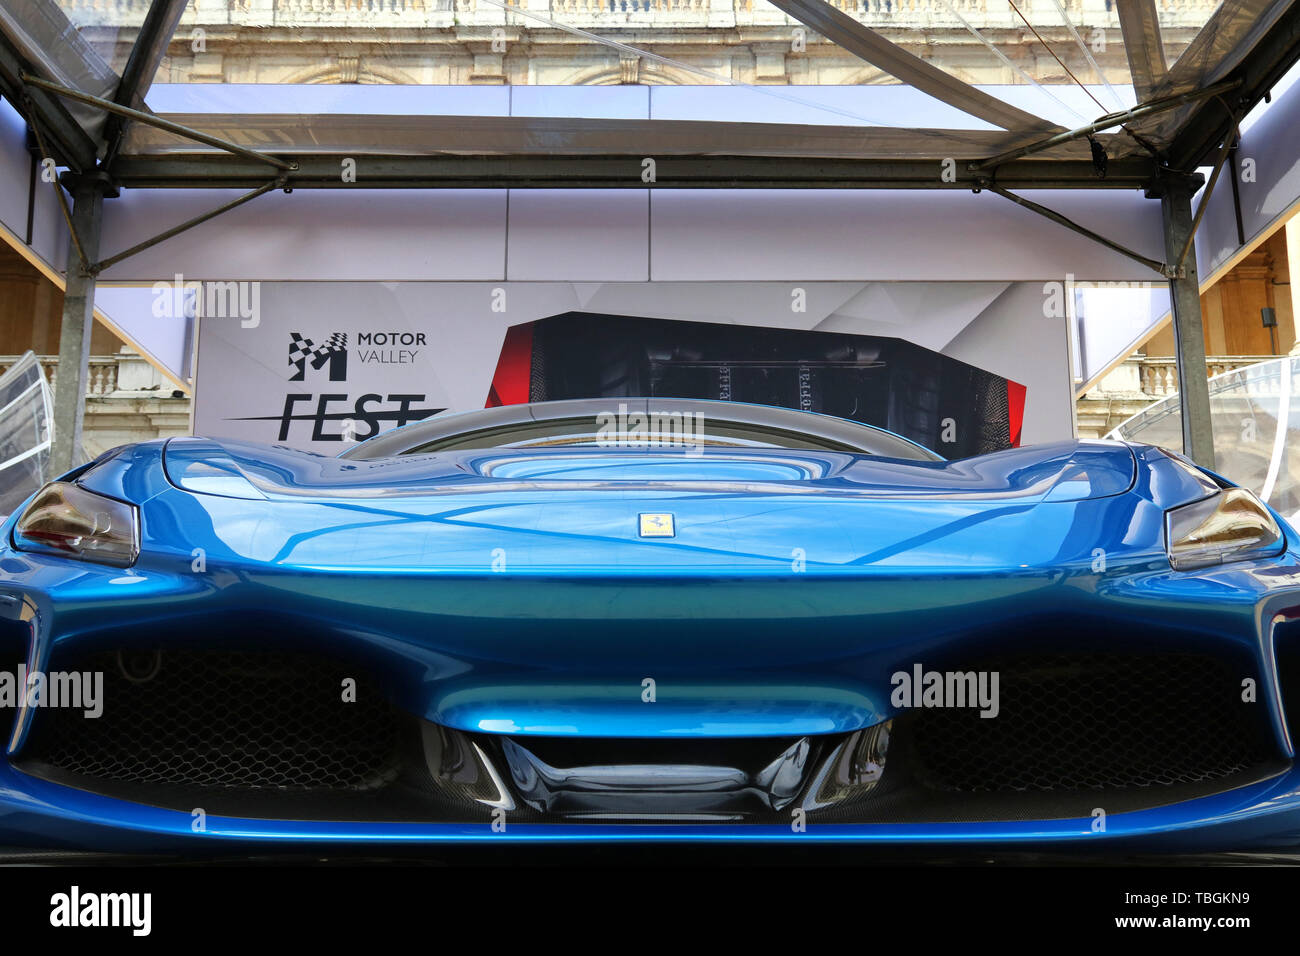 MODENA, ITALY, May 2019 - Motor Valley Fest exhibition, Ferrari F8 Tribute detail Stock Photo